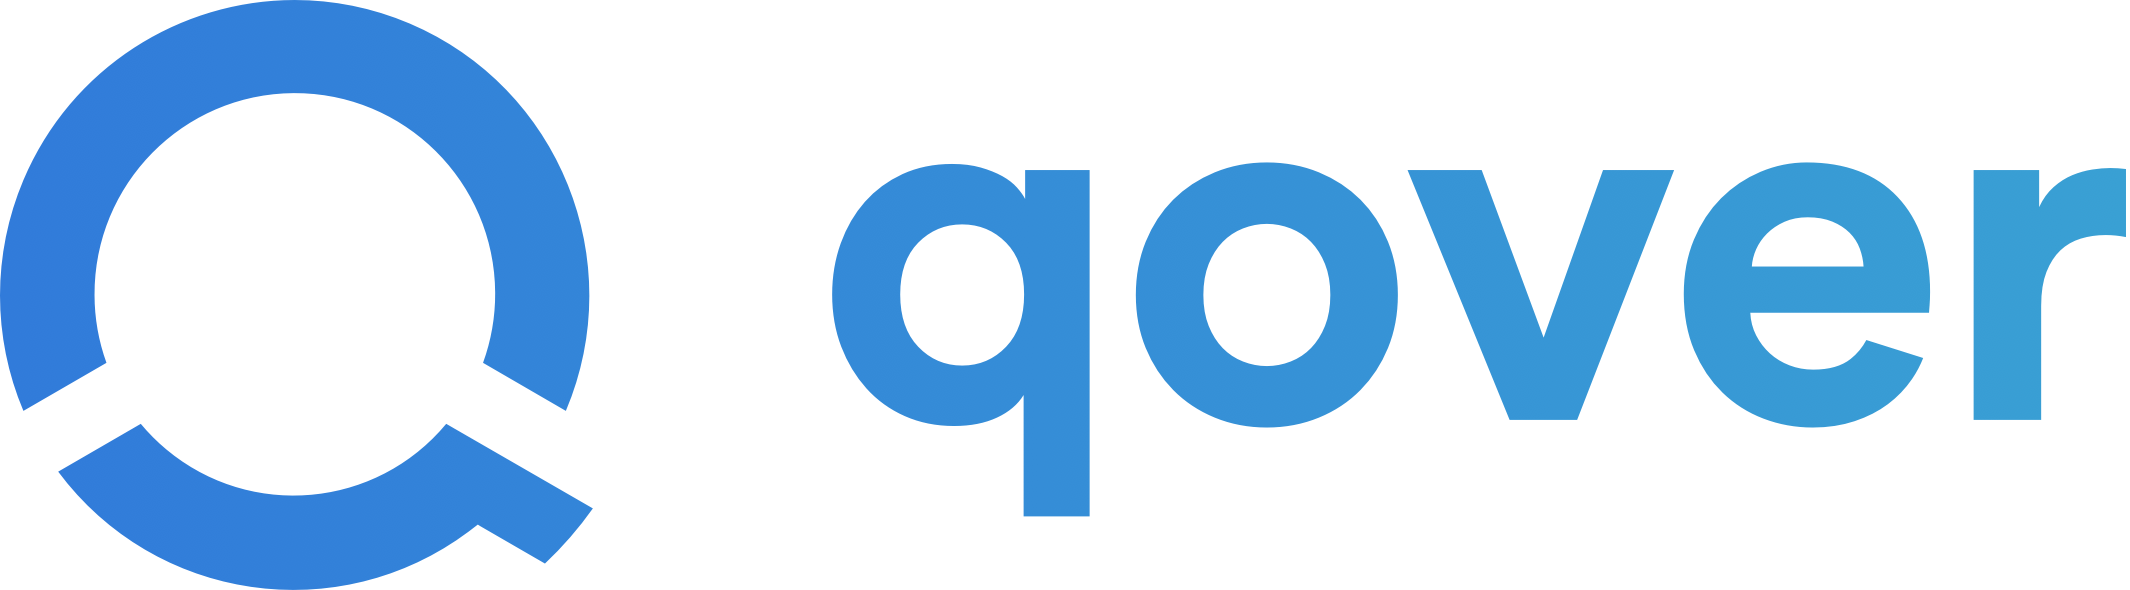 Qover's logo